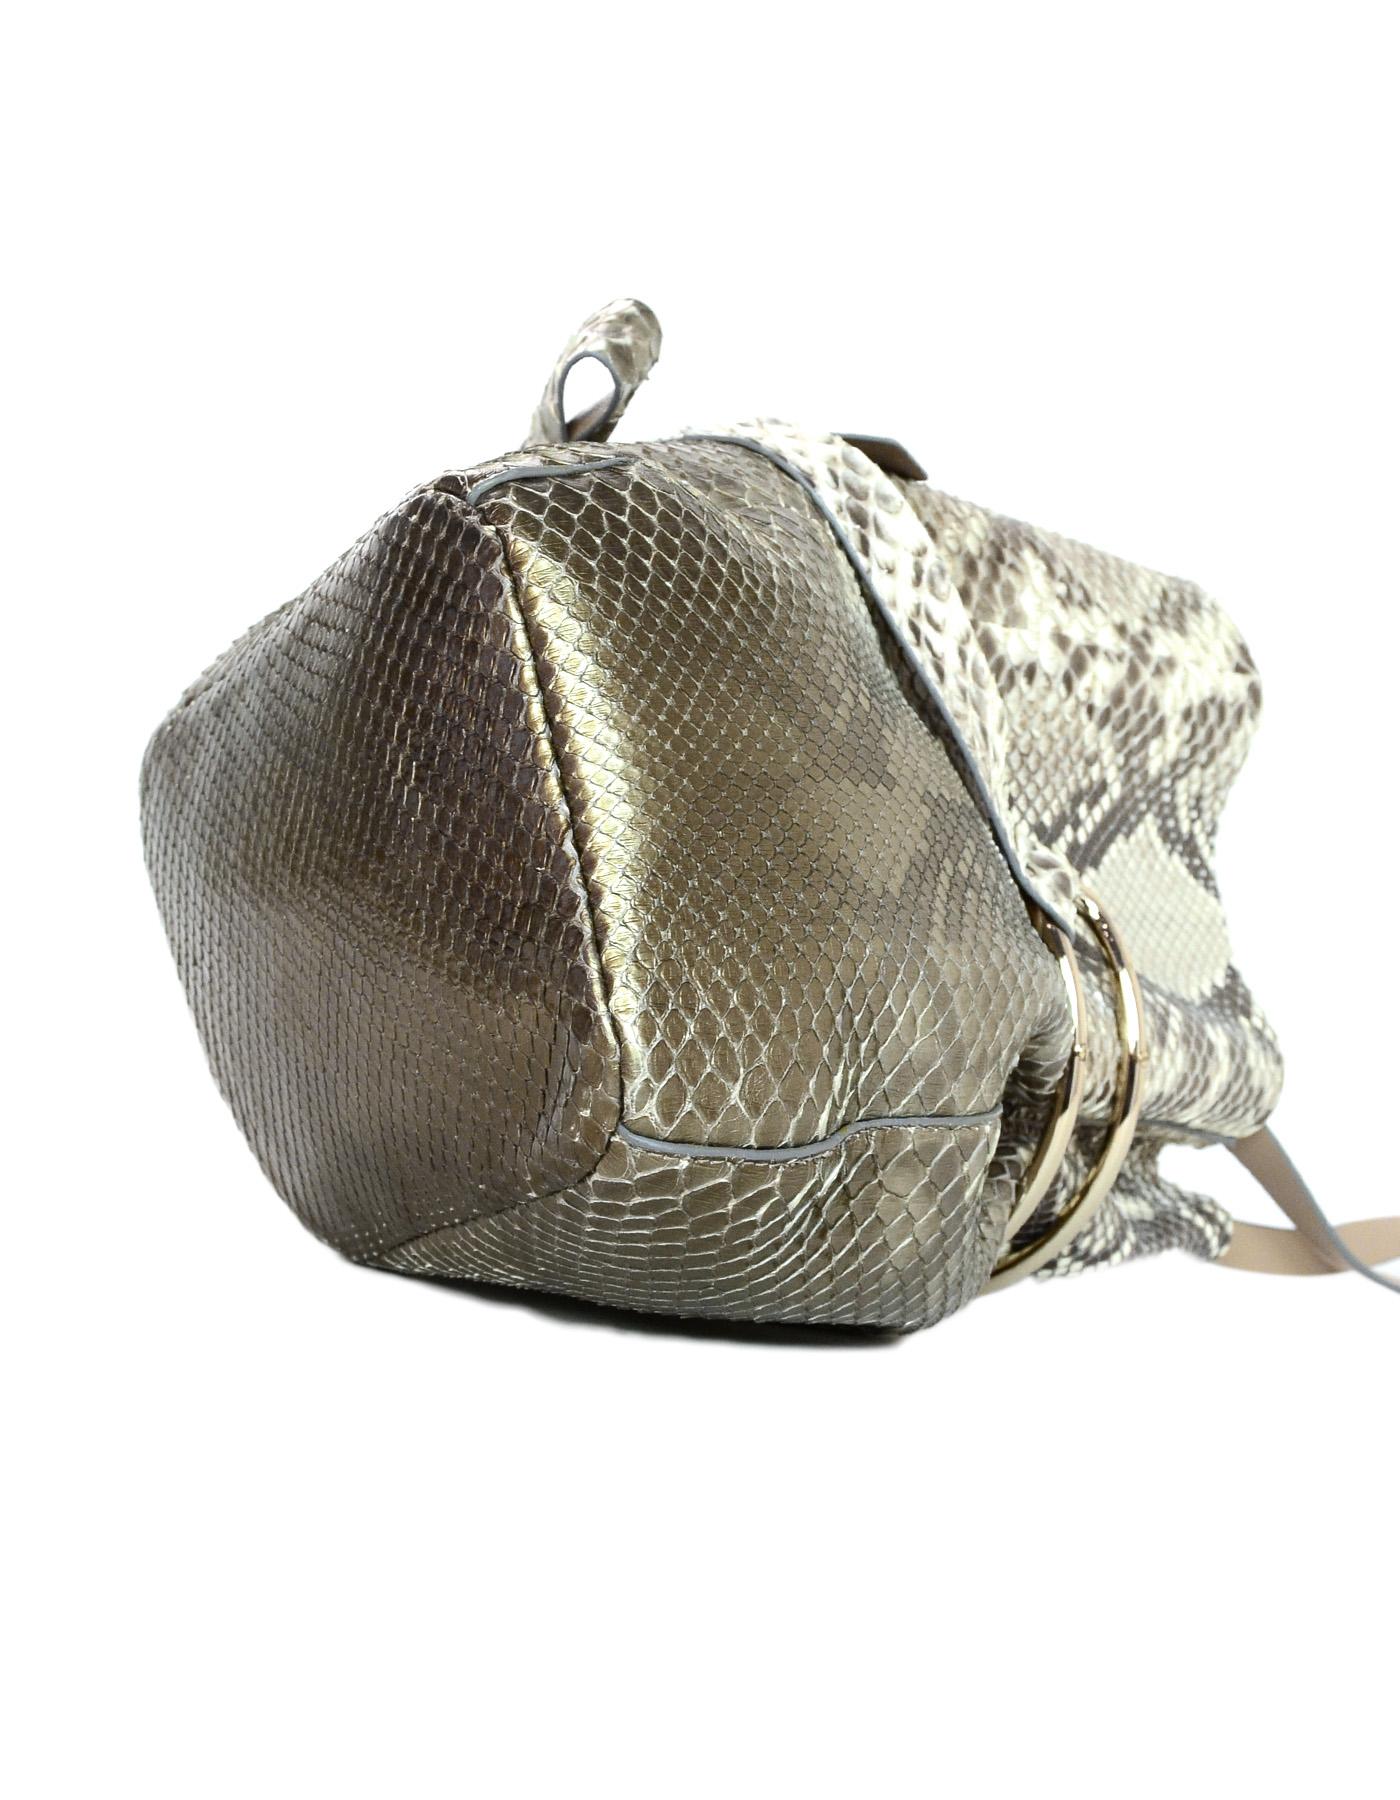 Women's Jimmy Choo Natural Eve Metallic Degrade Python Snakeskin Bucket Bag